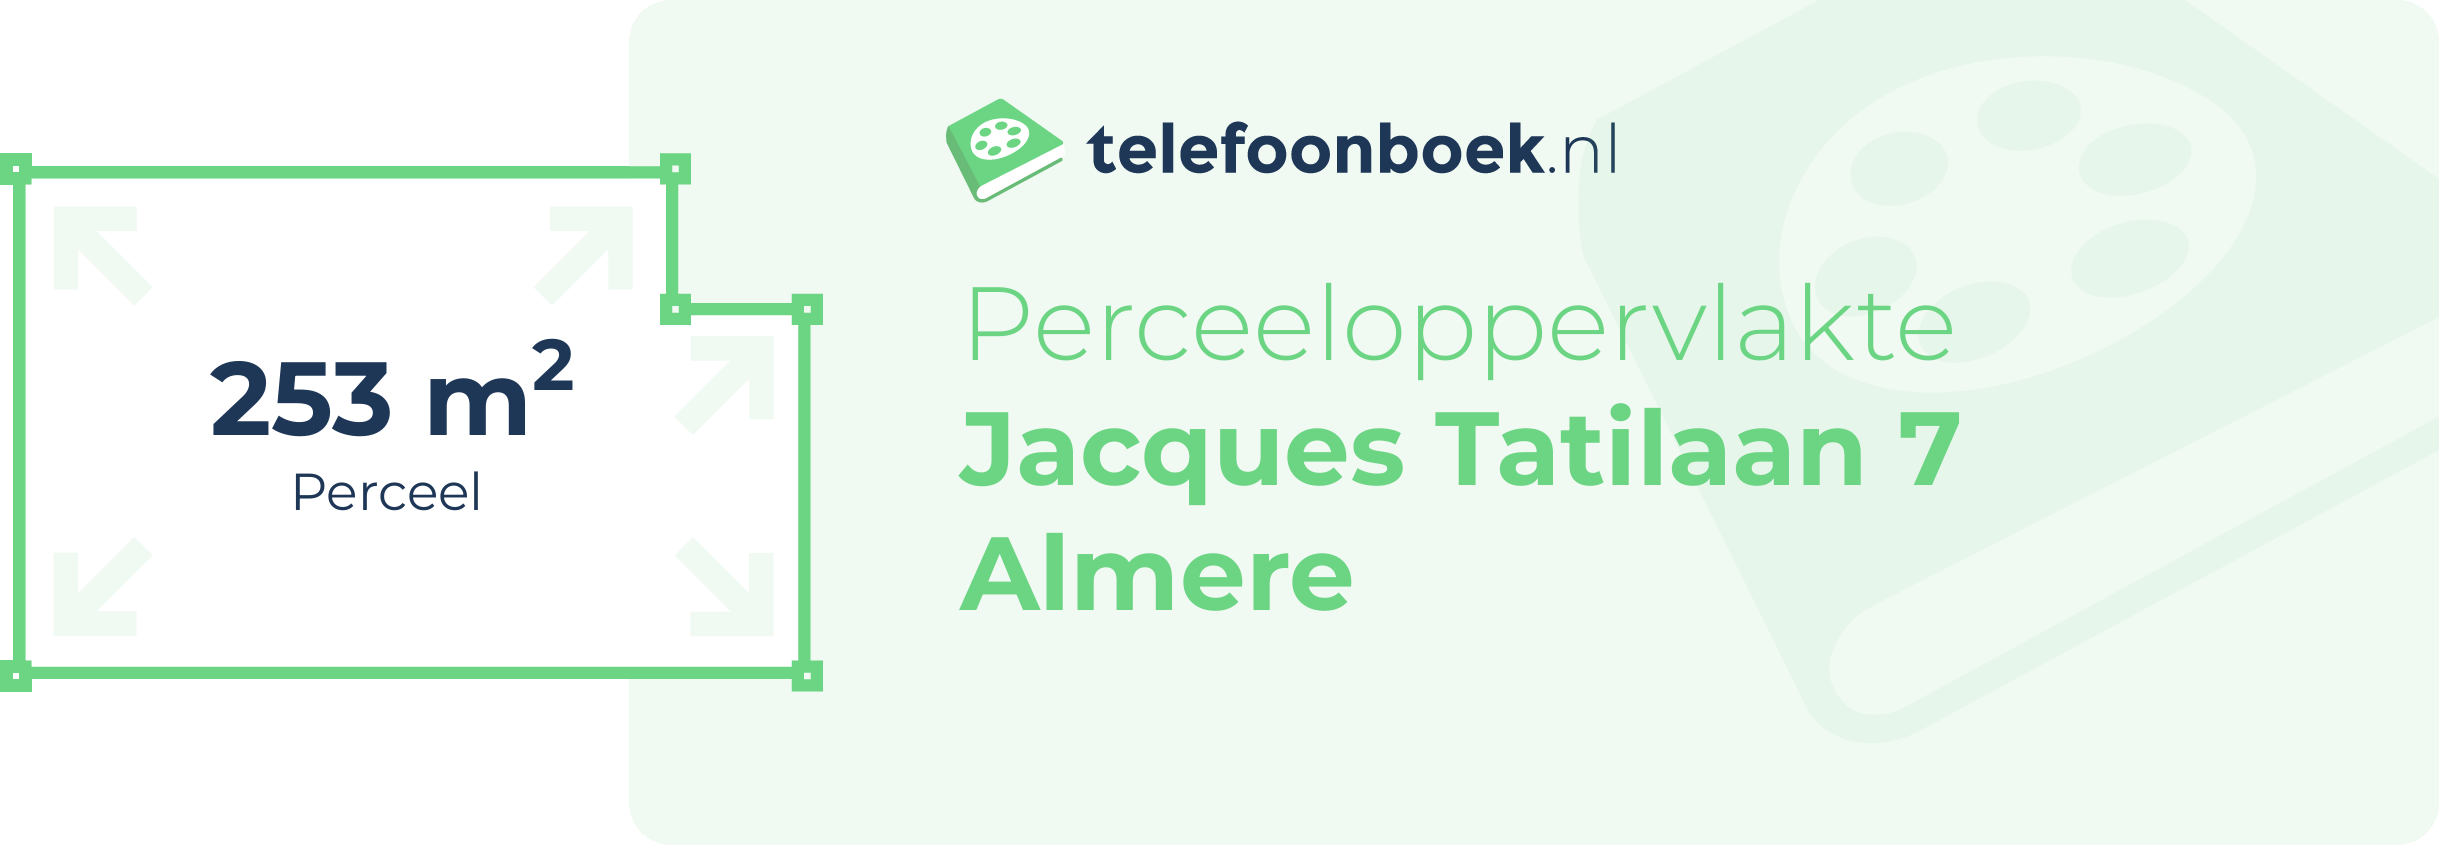 Perceeloppervlakte Jacques Tatilaan 7 Almere